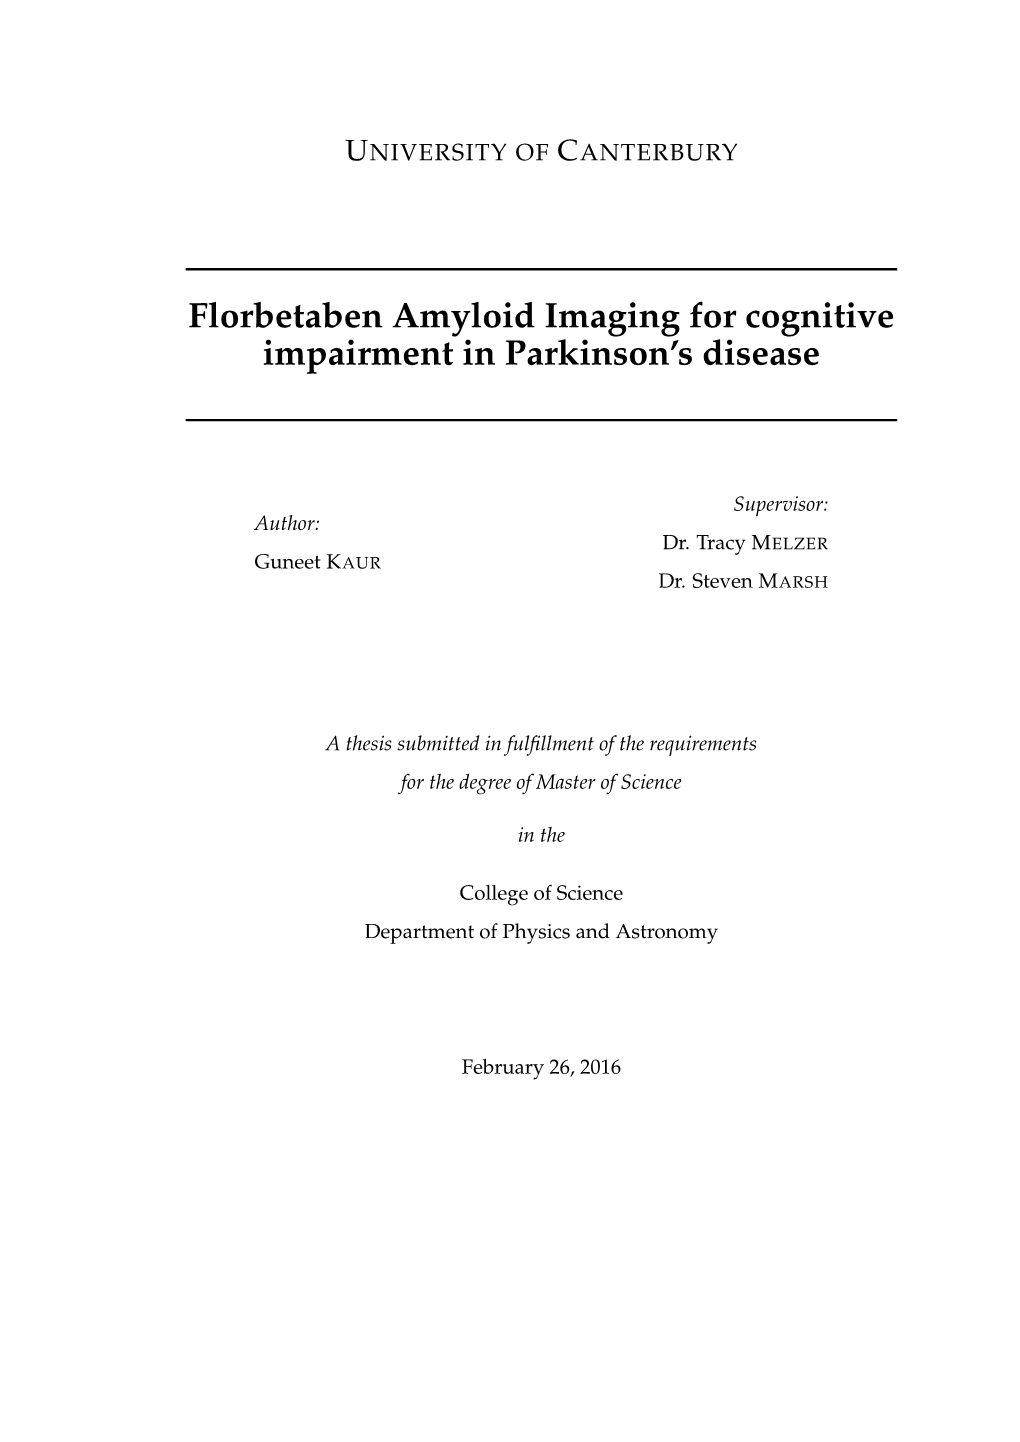 Florbetaben Amyloid Imaging for Cognitive Impairment in Parkinson's